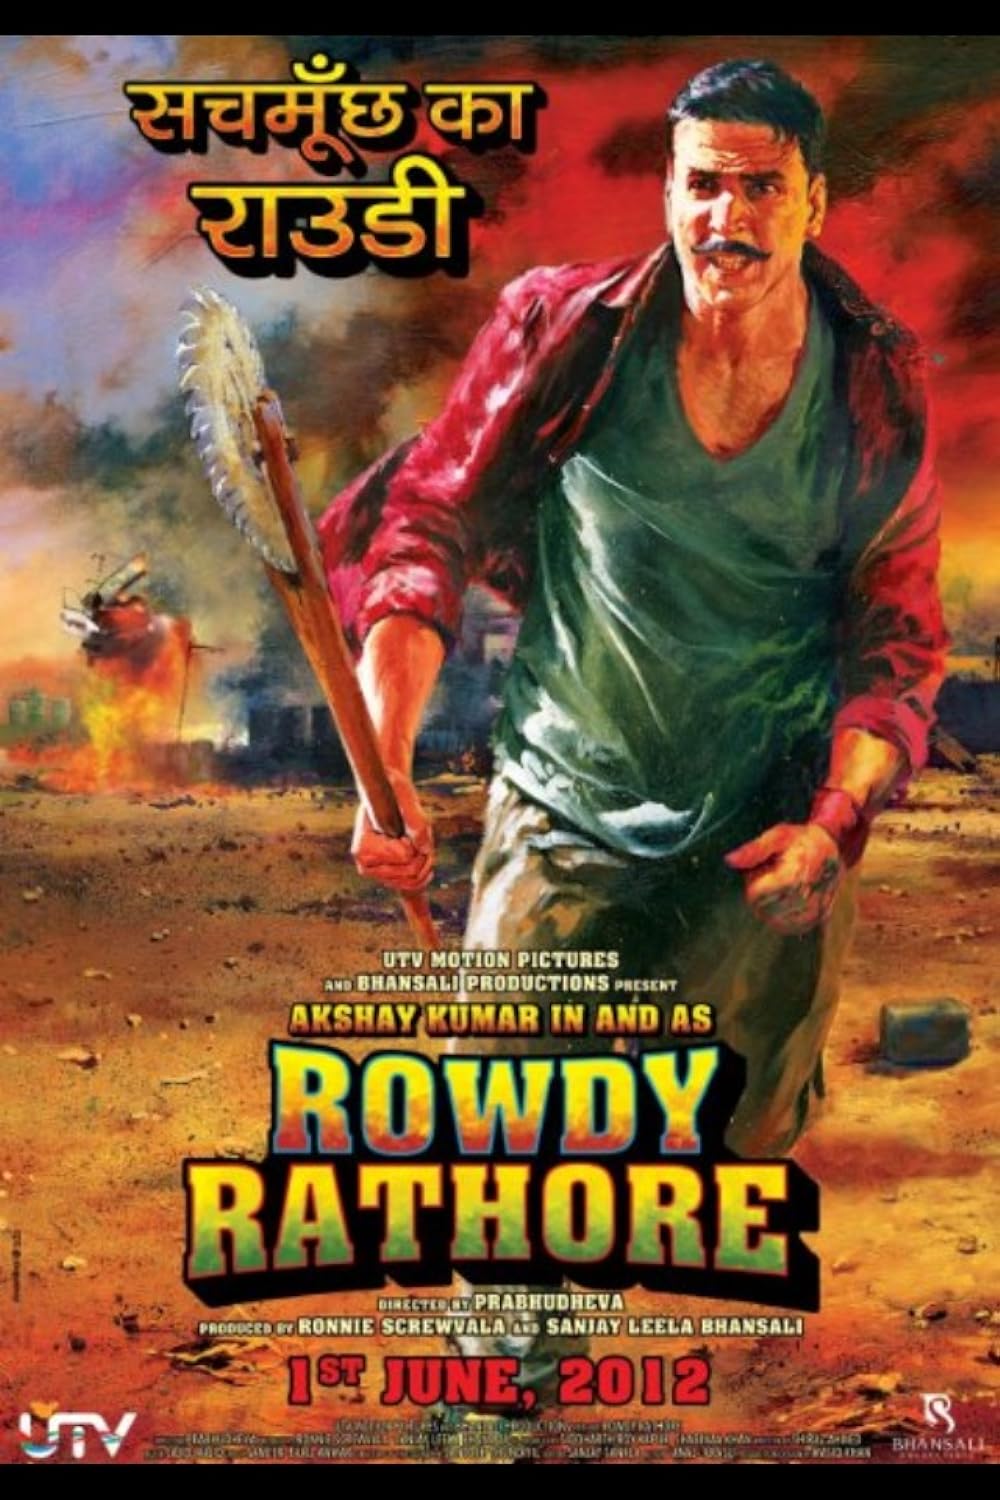 FULL MOVIE: Rowdy Rathore (2012)